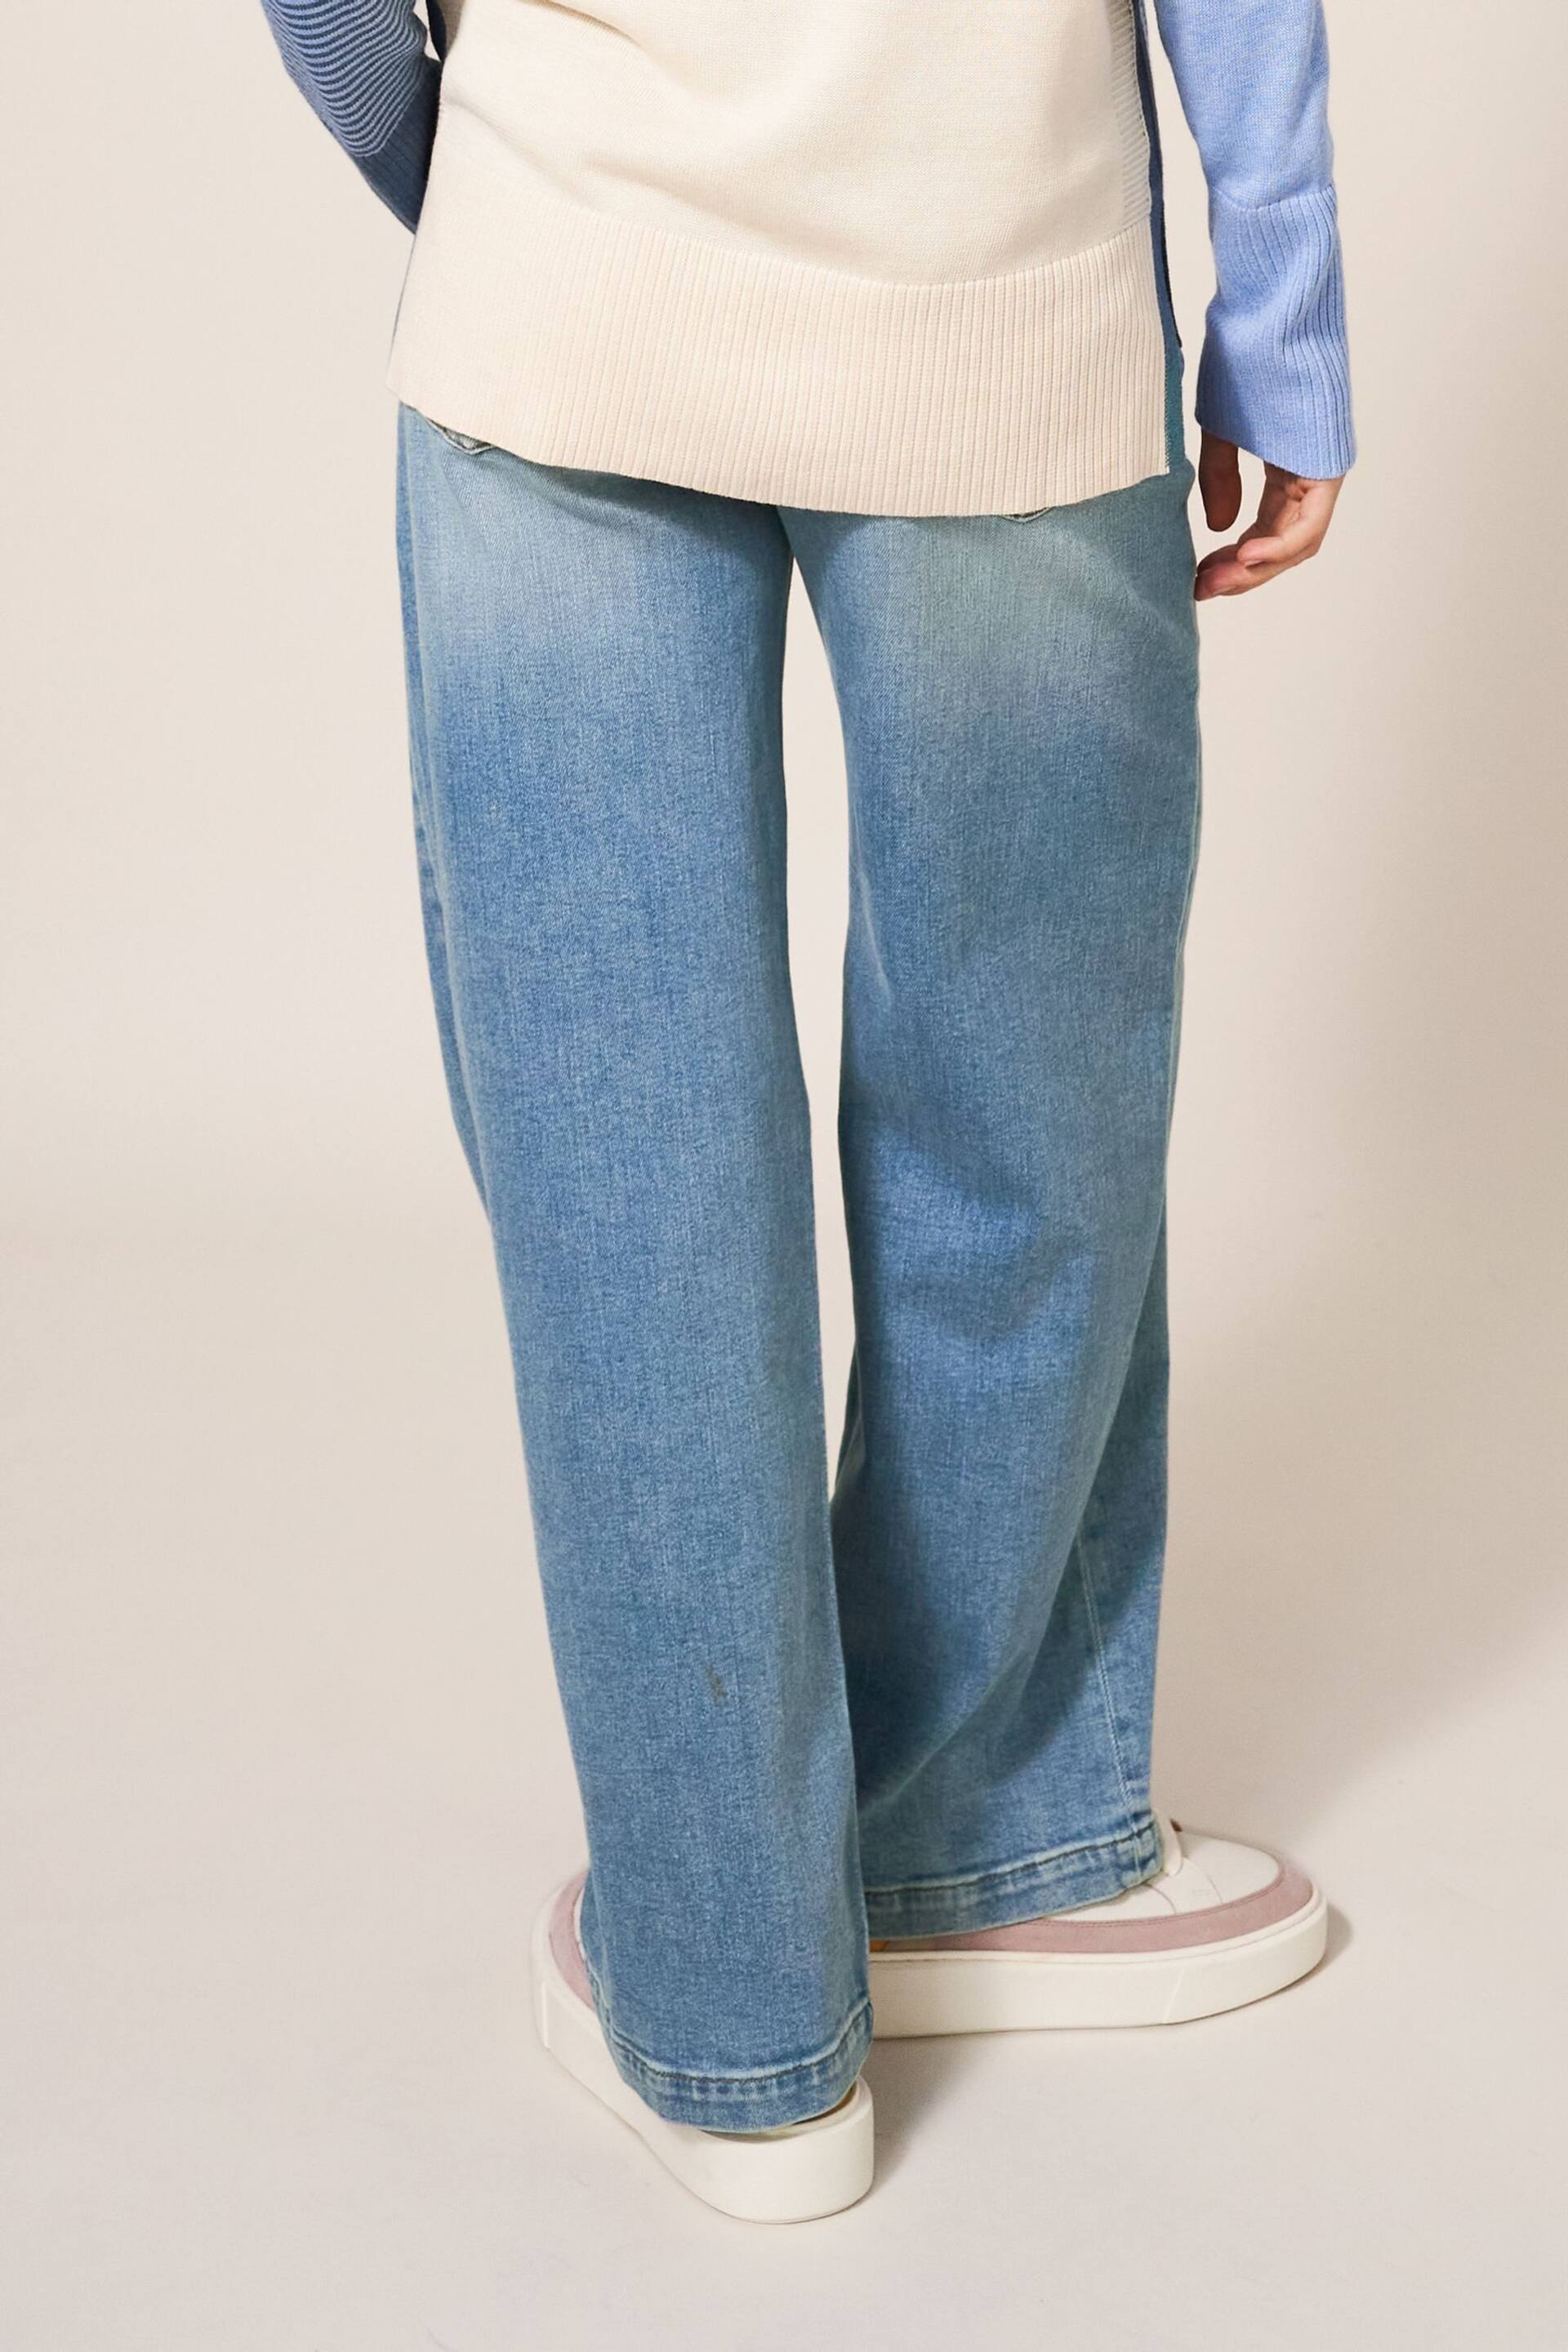 White Stuff Blue/White Wide Leg Sadie Jeans - Image 2 of 8